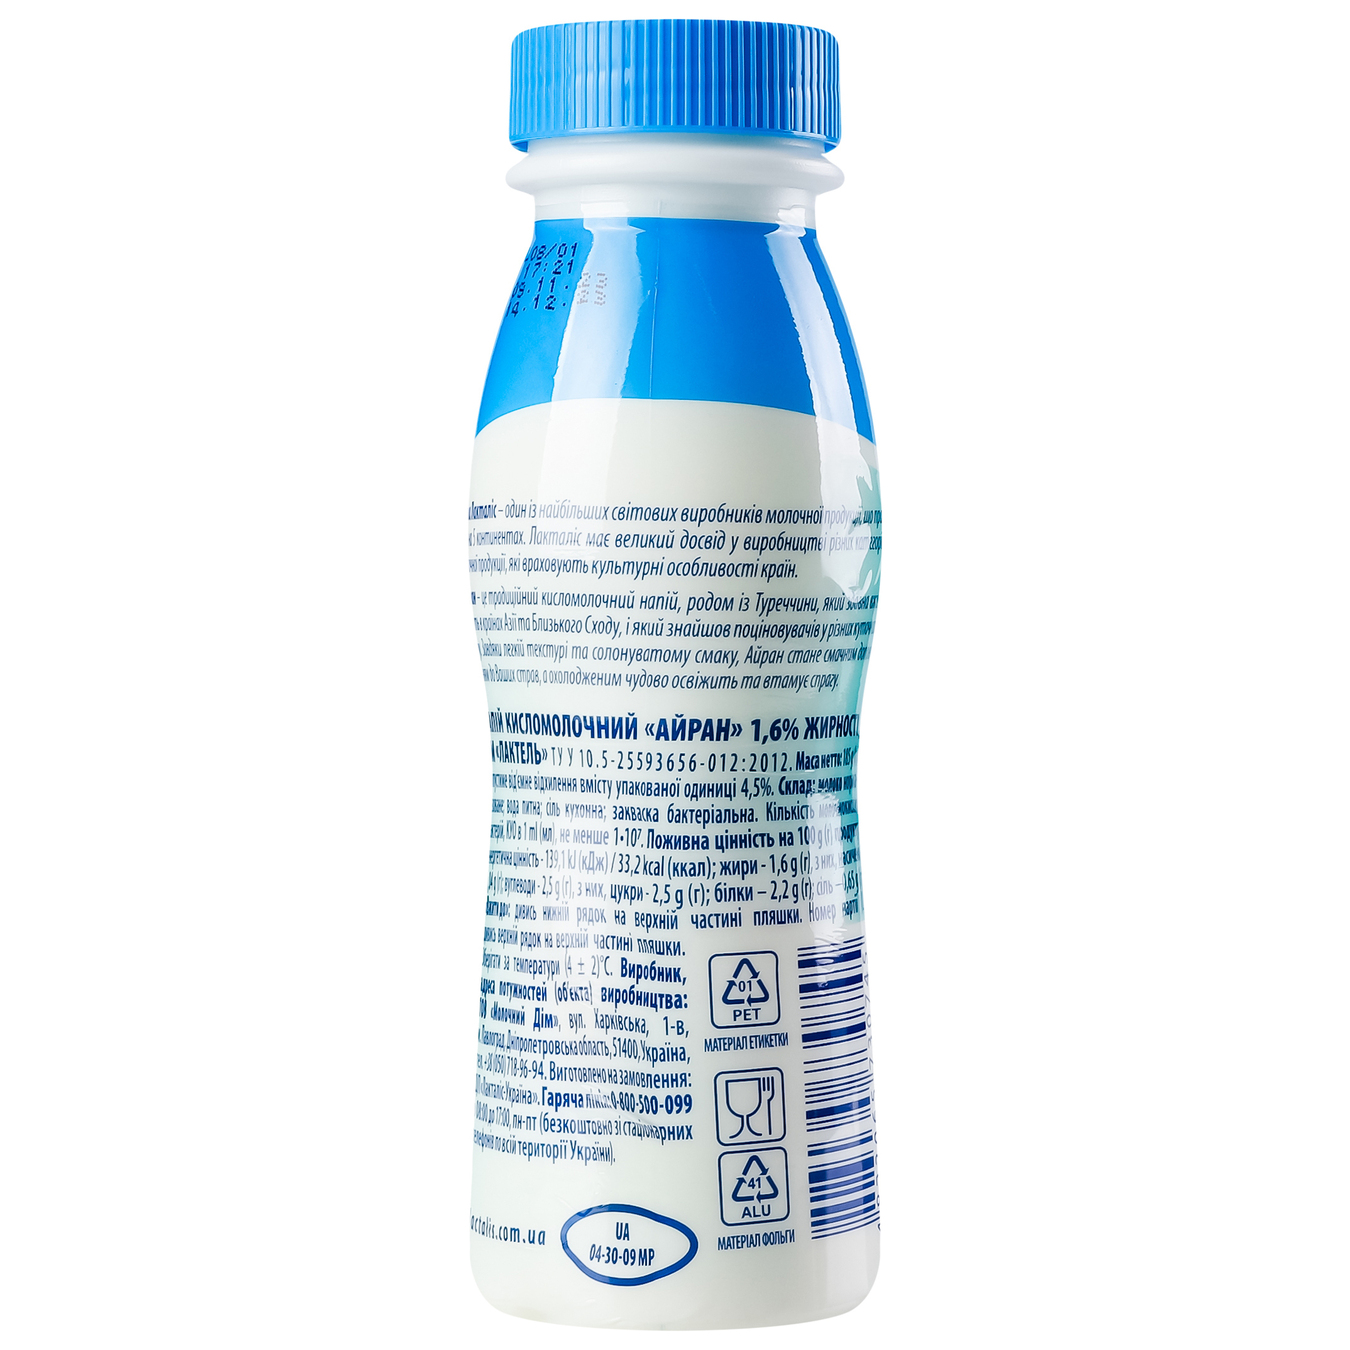 Fermented milk drink Lactel Ayran drinking bottle 1.6% 185g 5